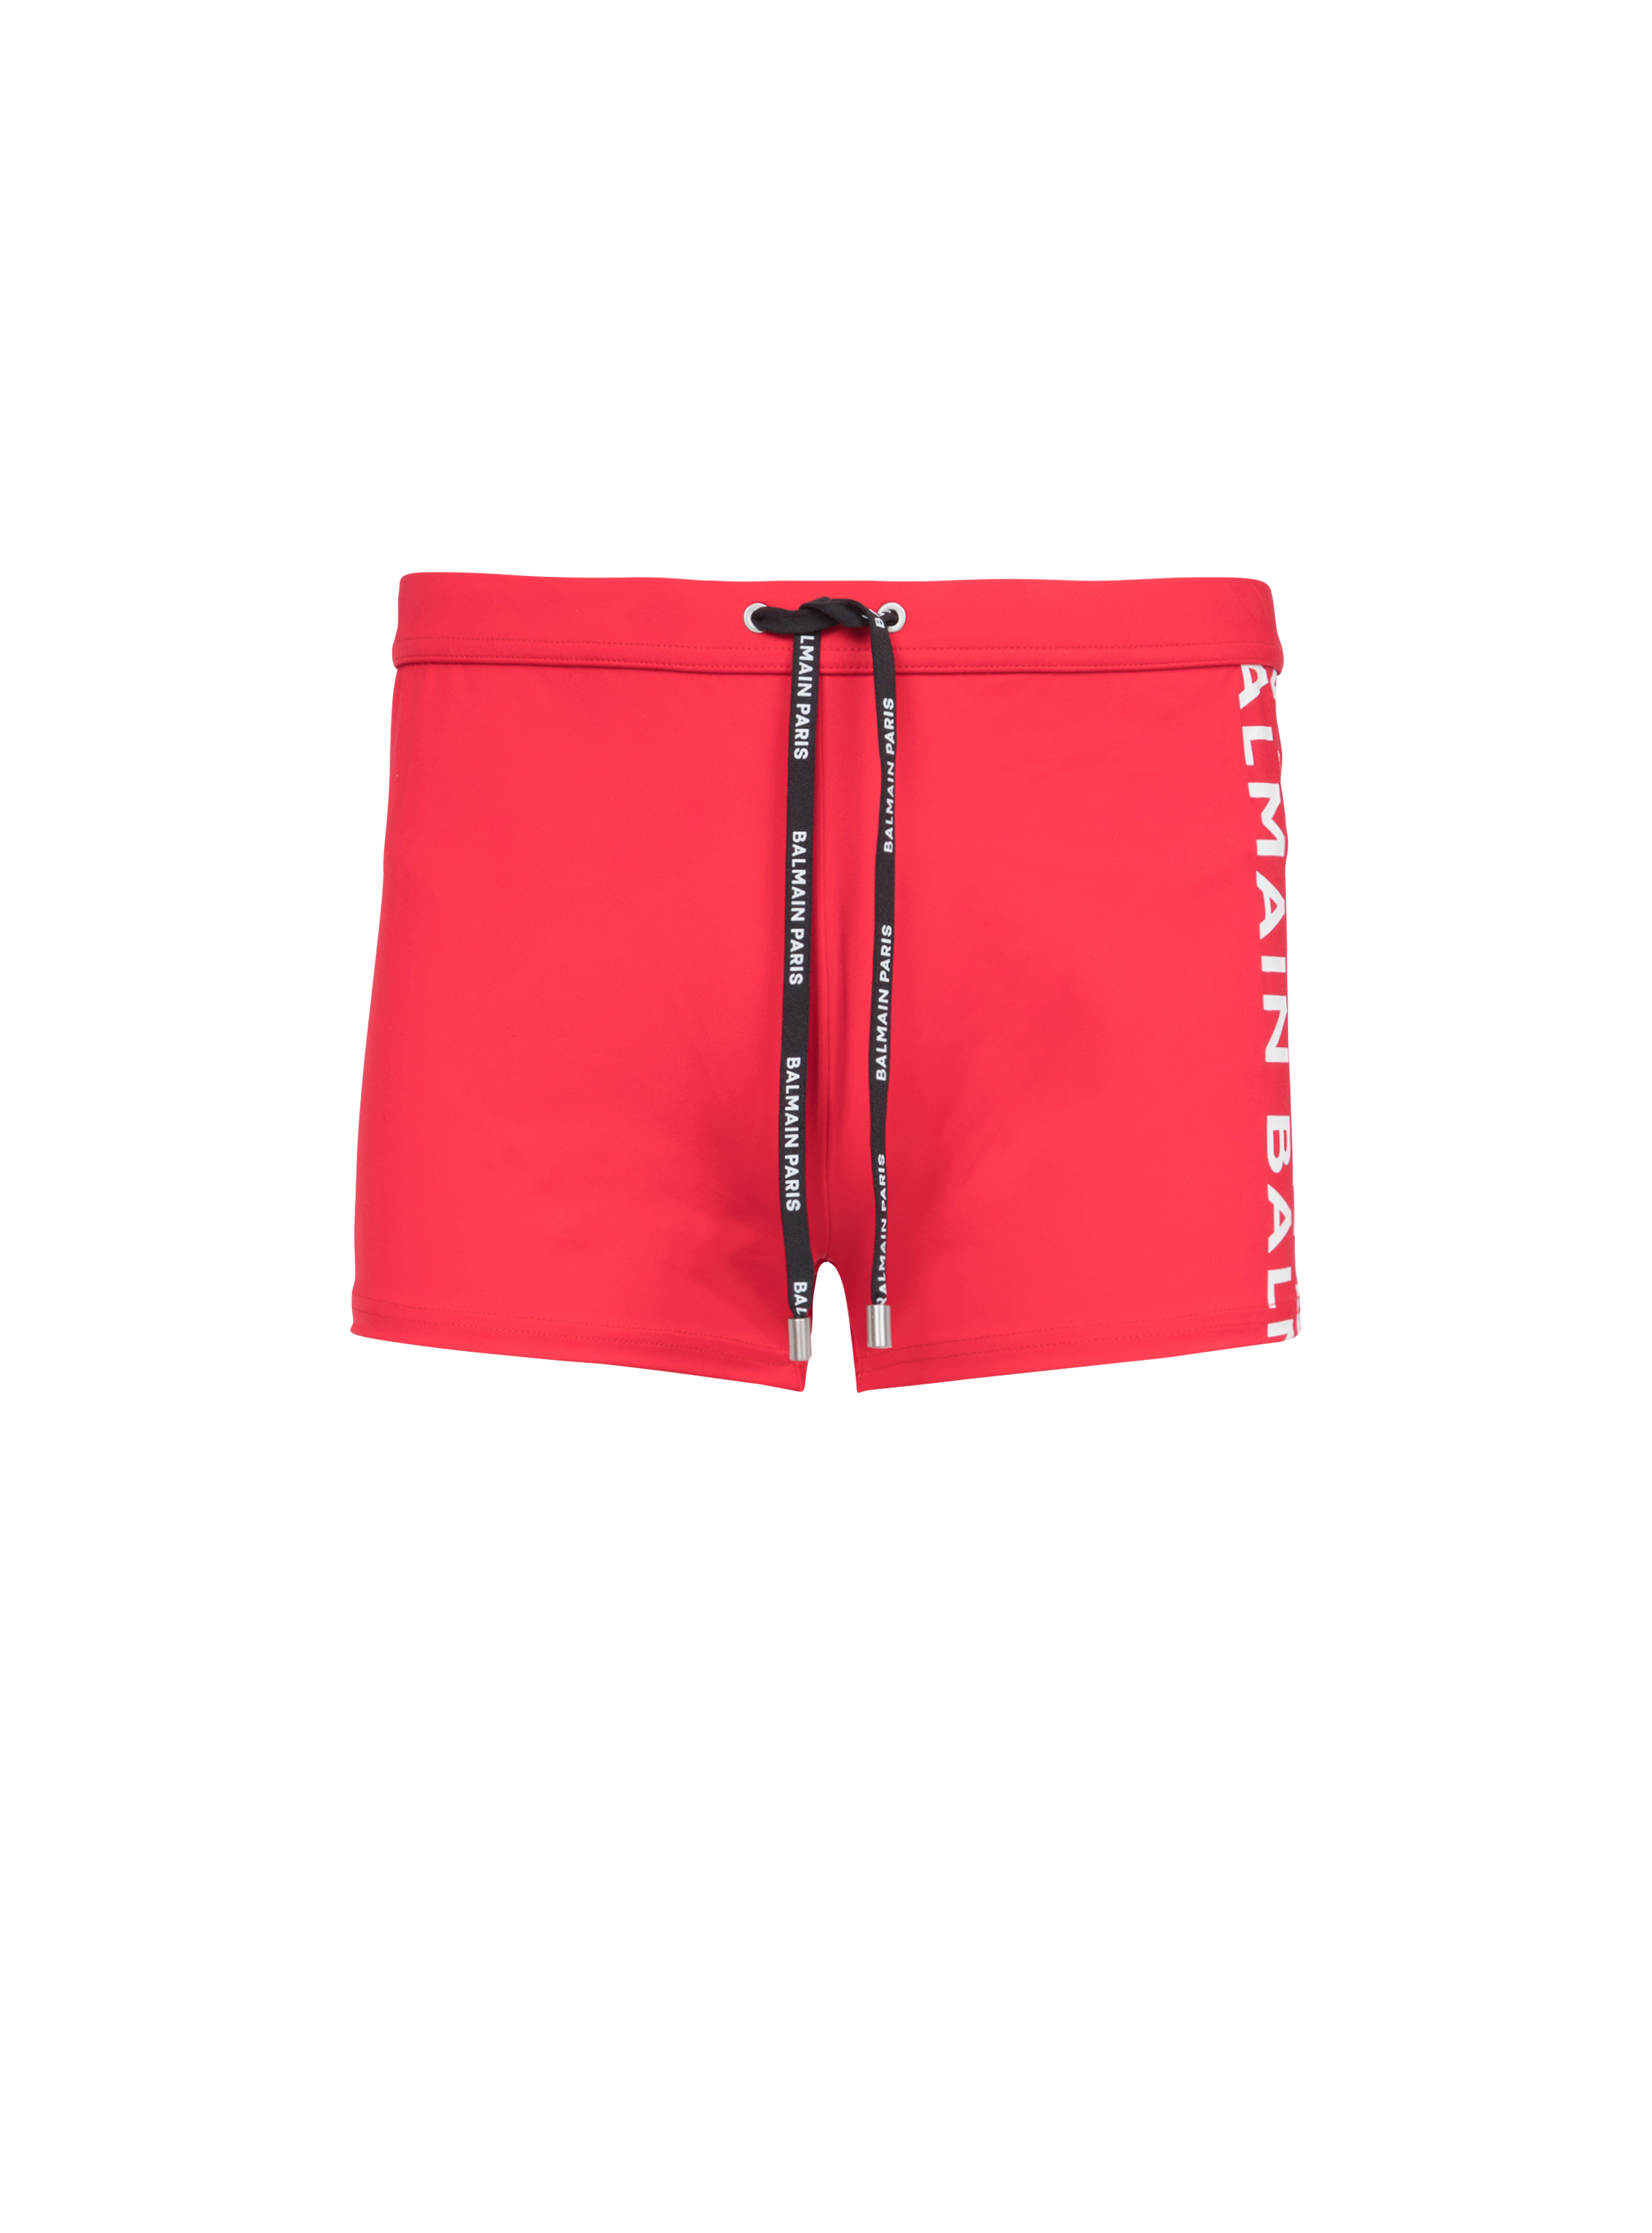 Balmain logo swimming trunks, red